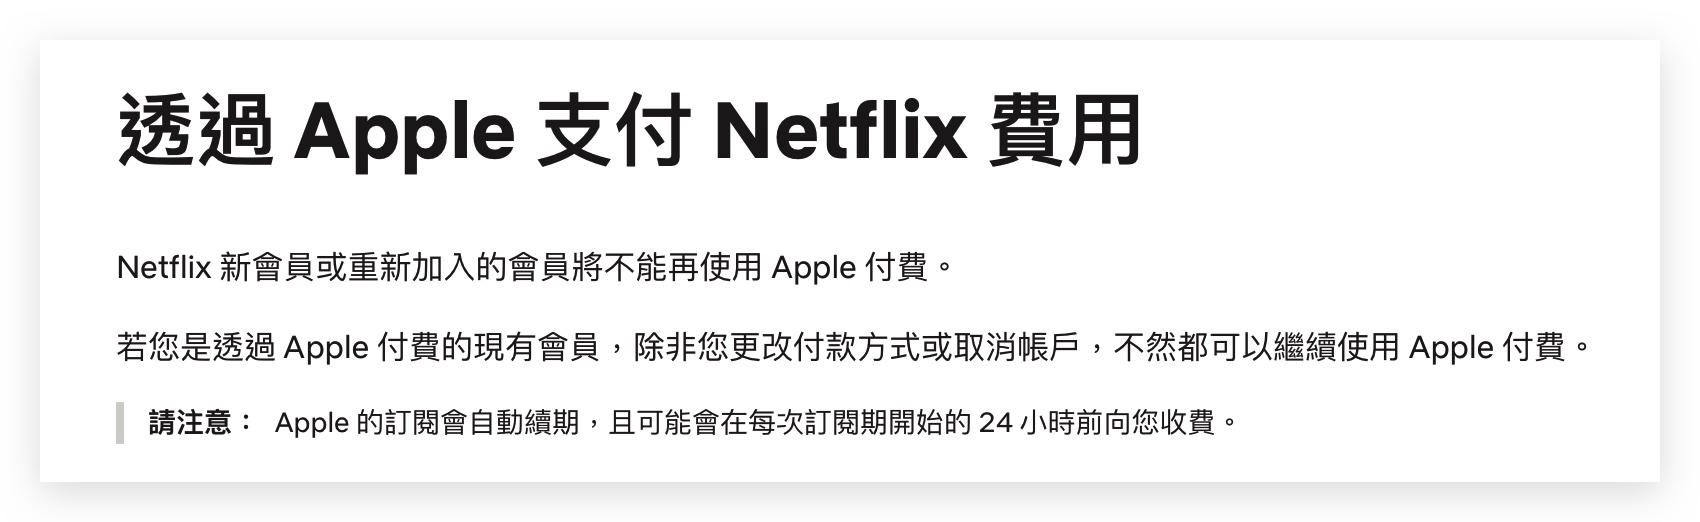 Netflix App Store Apple 第三方支付 訂閱